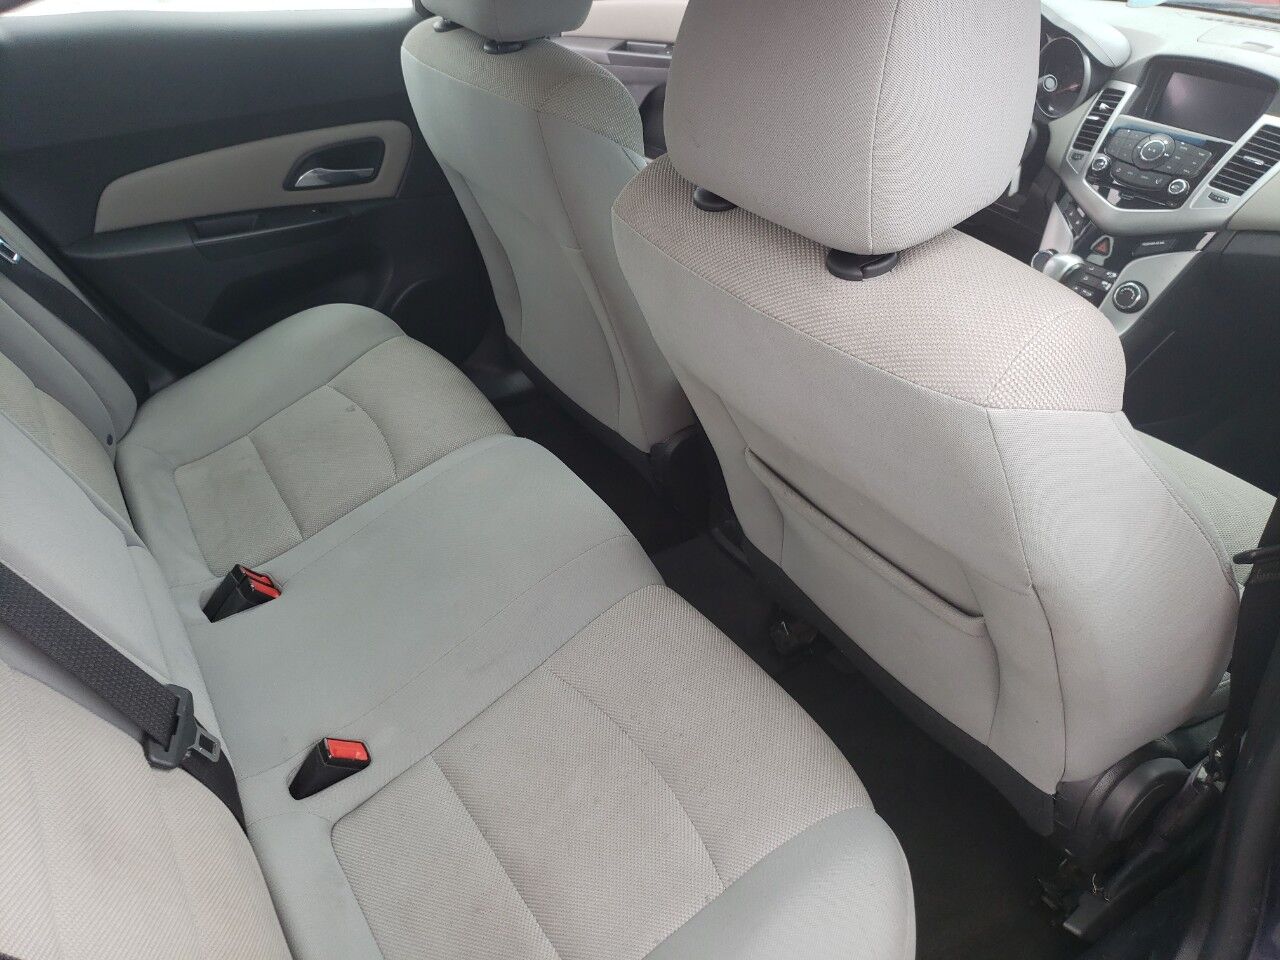 2014 CHEVROLET Cruze Sedan - $5,995